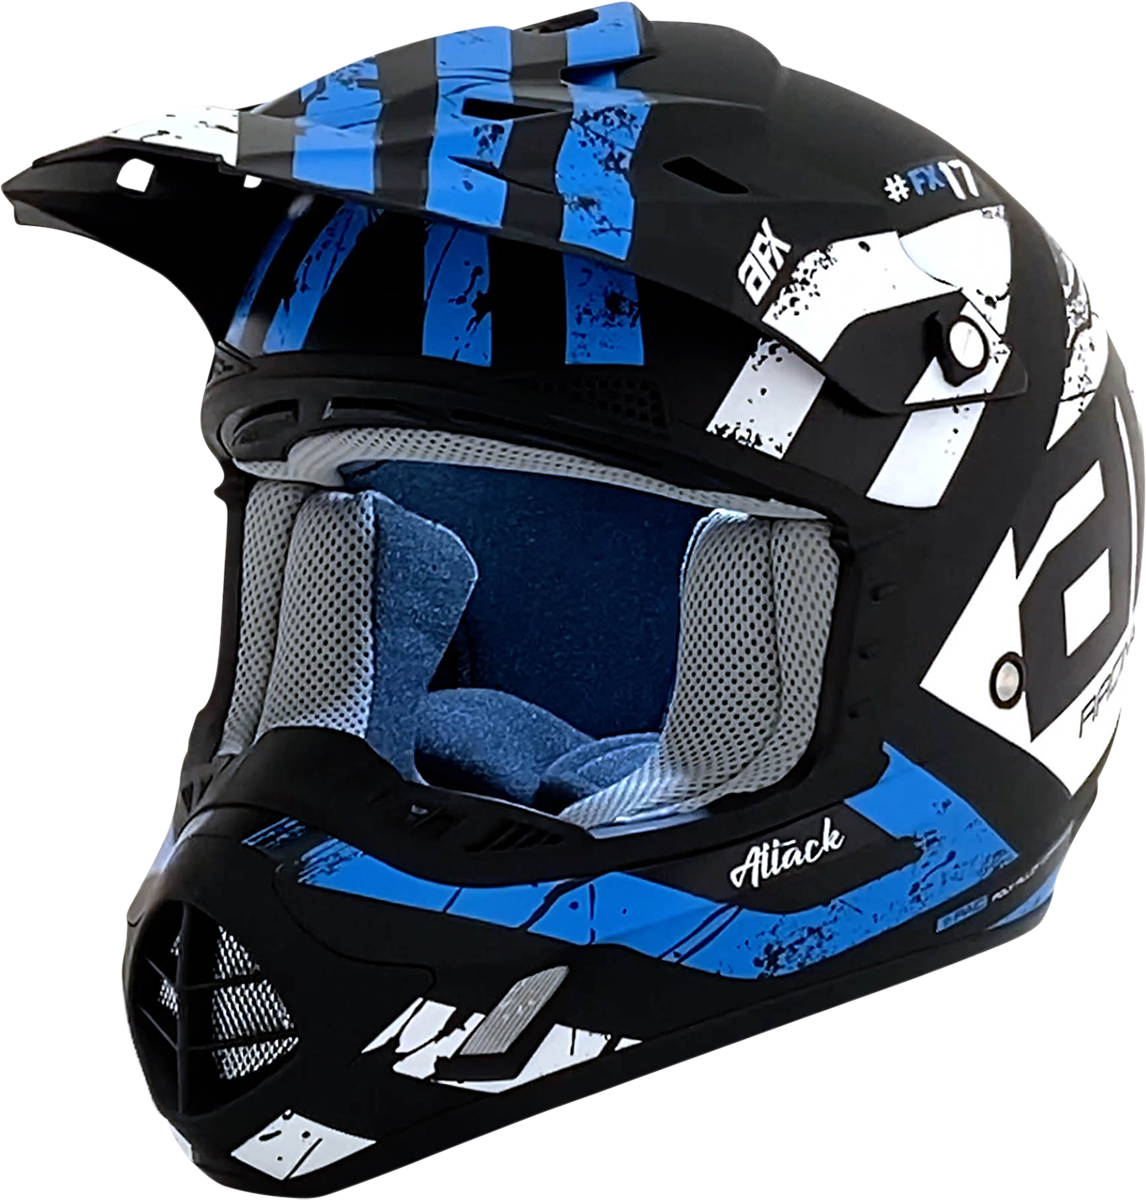 FX-17 Helmet - Attack - Matte Black/Blue - 3XL